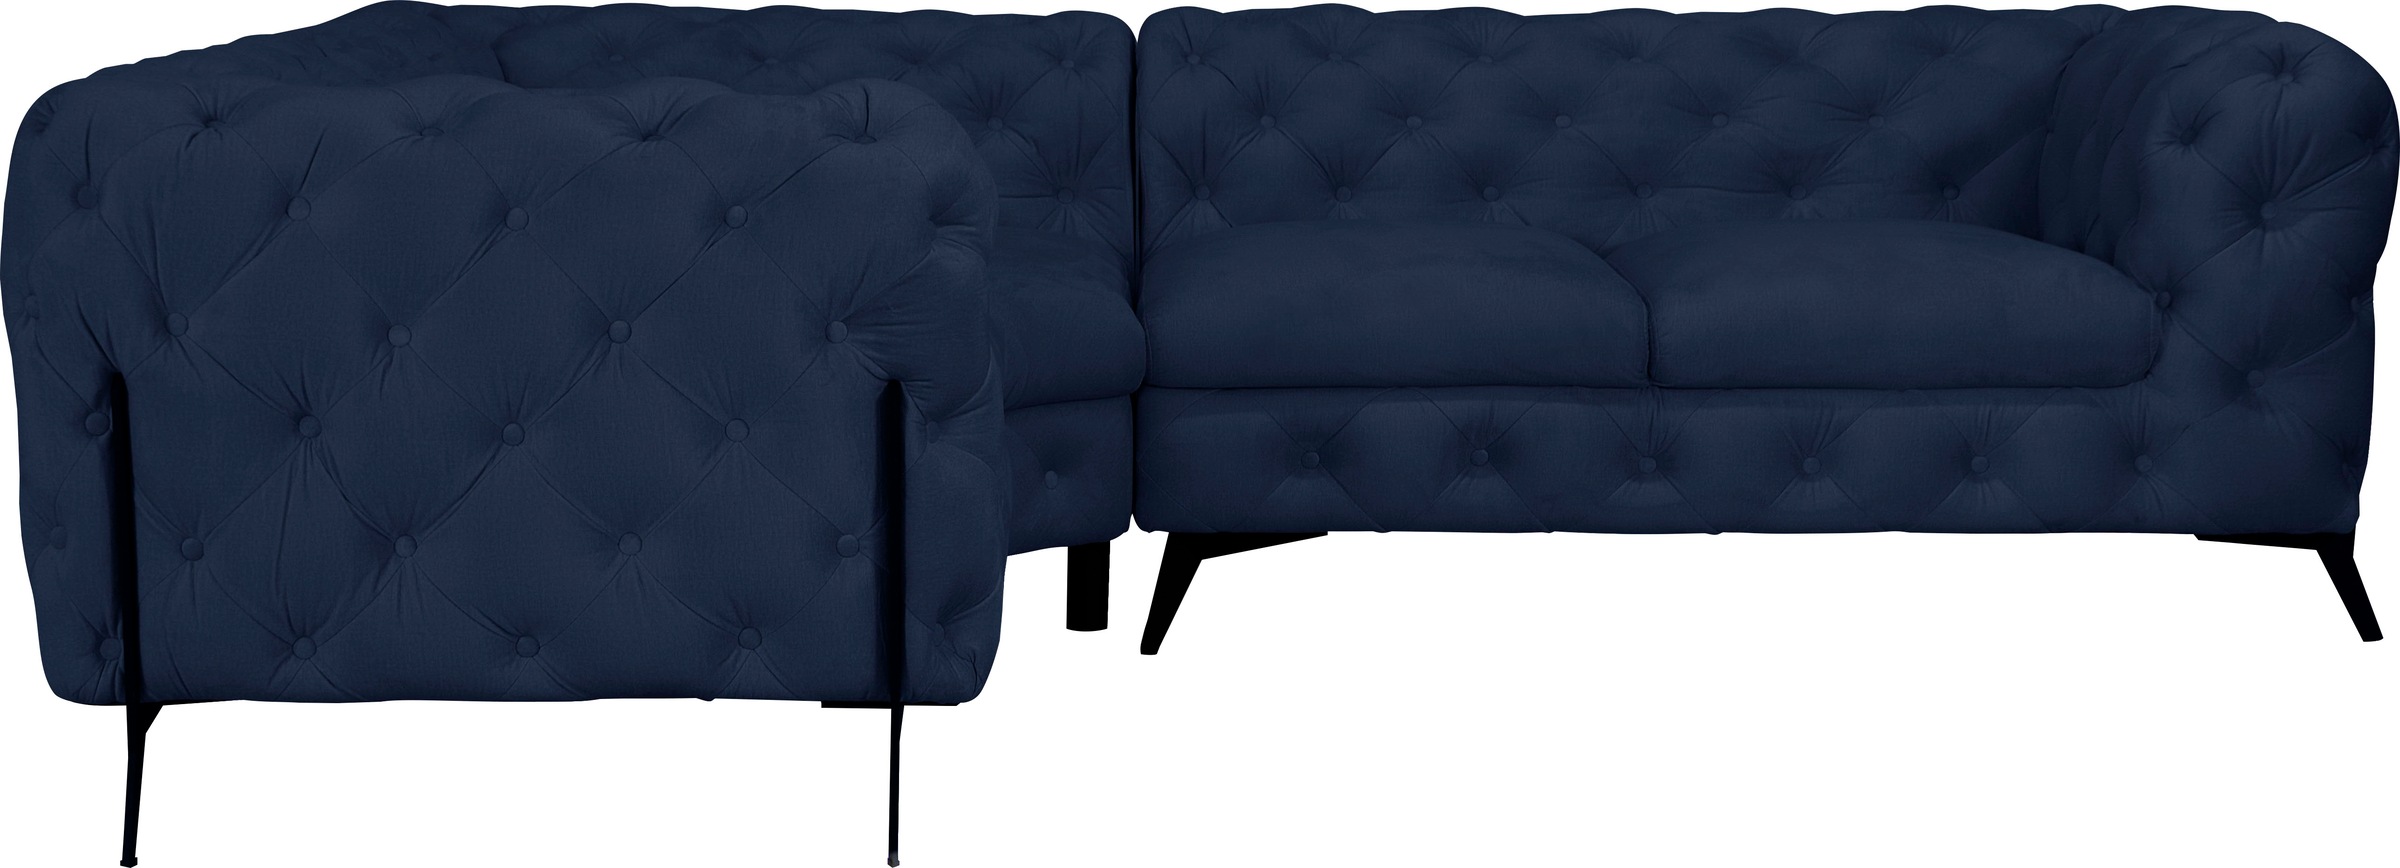 Leonique Chesterfield-Sofa »Amaury L-Form«, Chesterfield-Optik, Breite/Tiefe je 262 cm, Fussfarbe wählbar